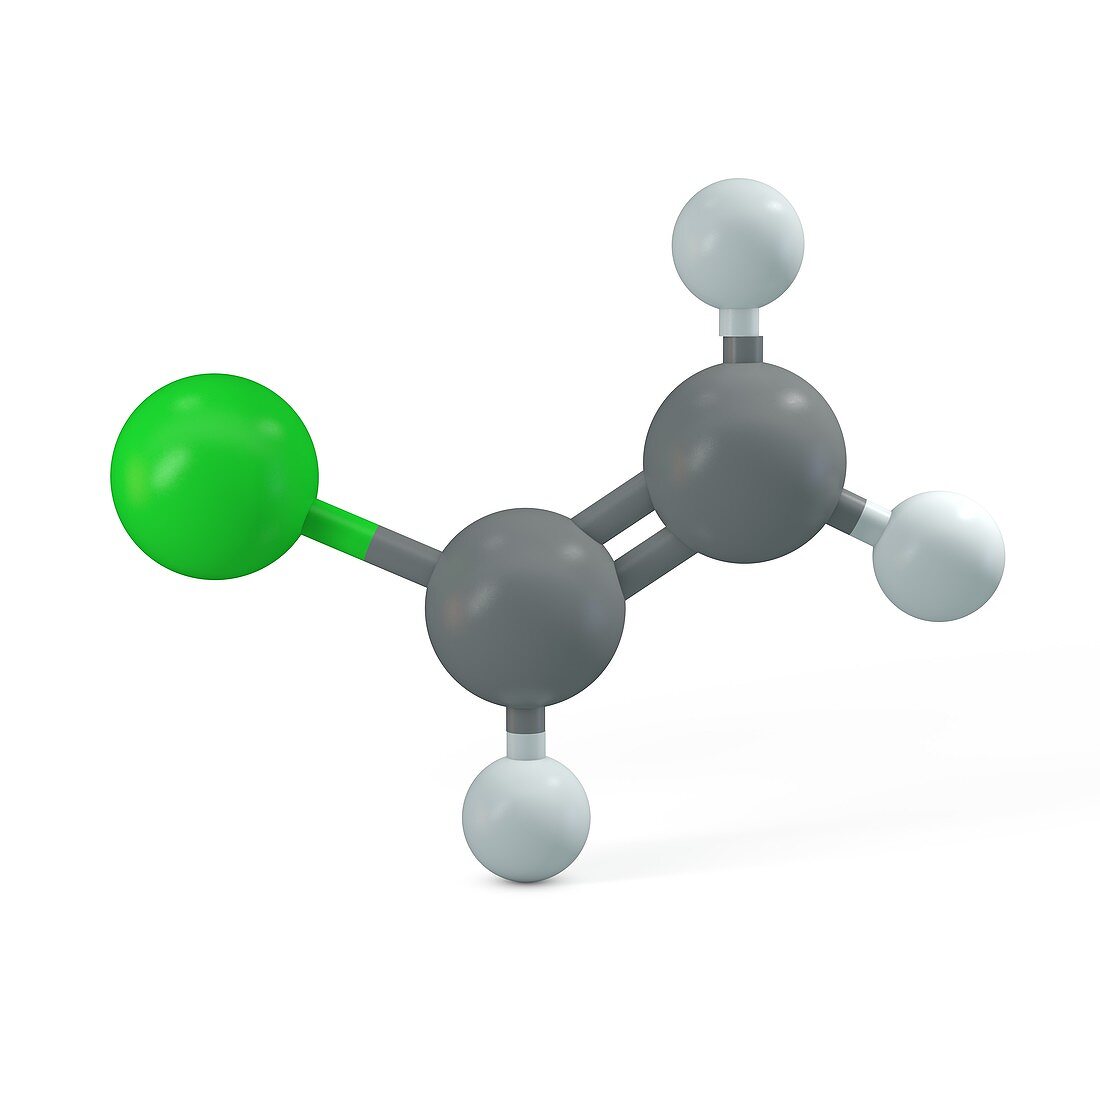 Chloroethene molecule, illustration